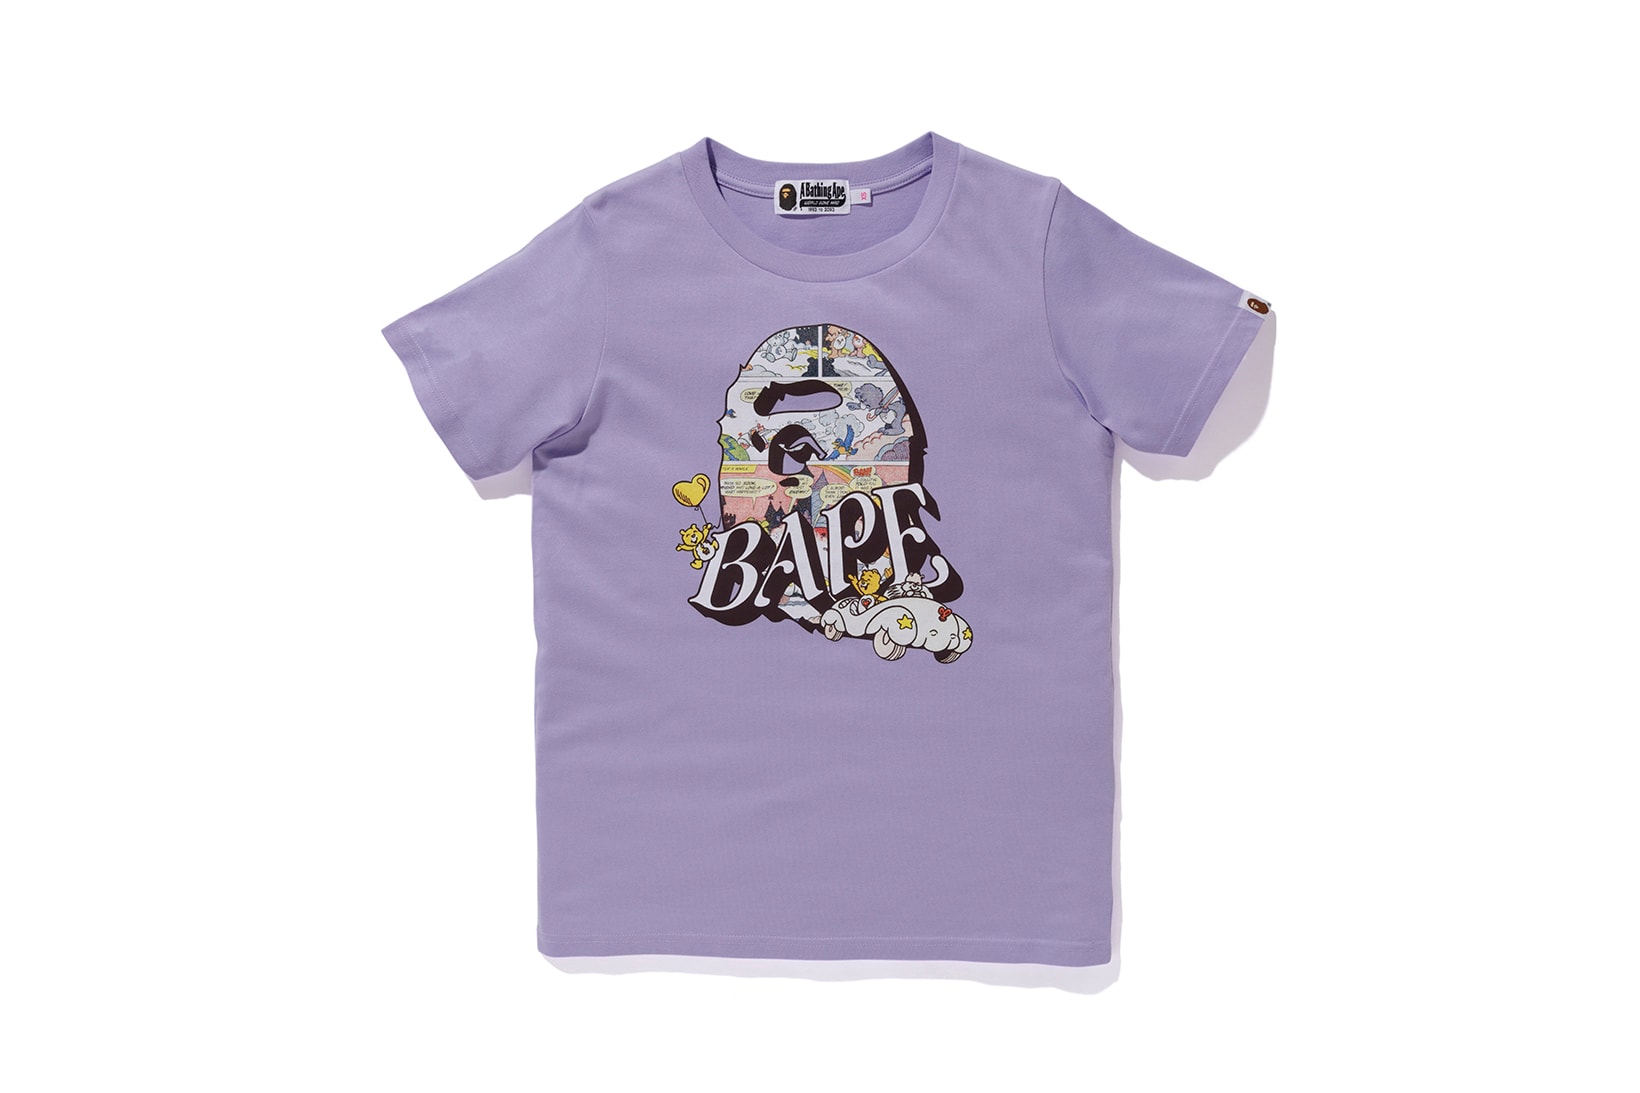 Care Bears x BAPE Collection Logo T-Shirt Purple